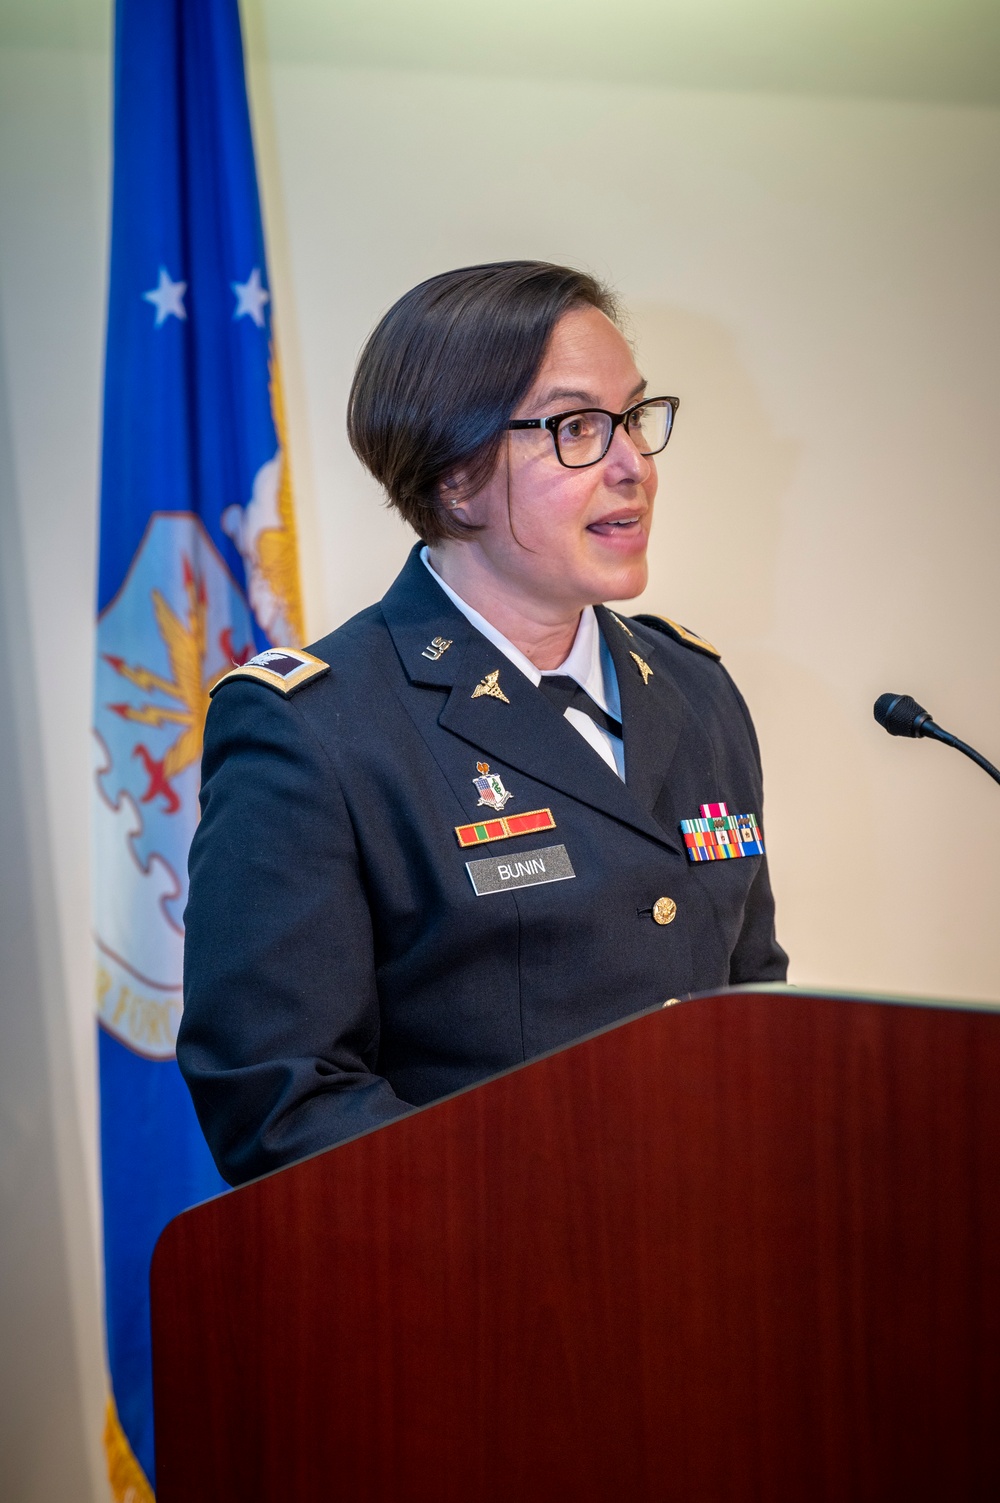 U.S. Secretary of Transportation observes Pride Month at Walter Reed